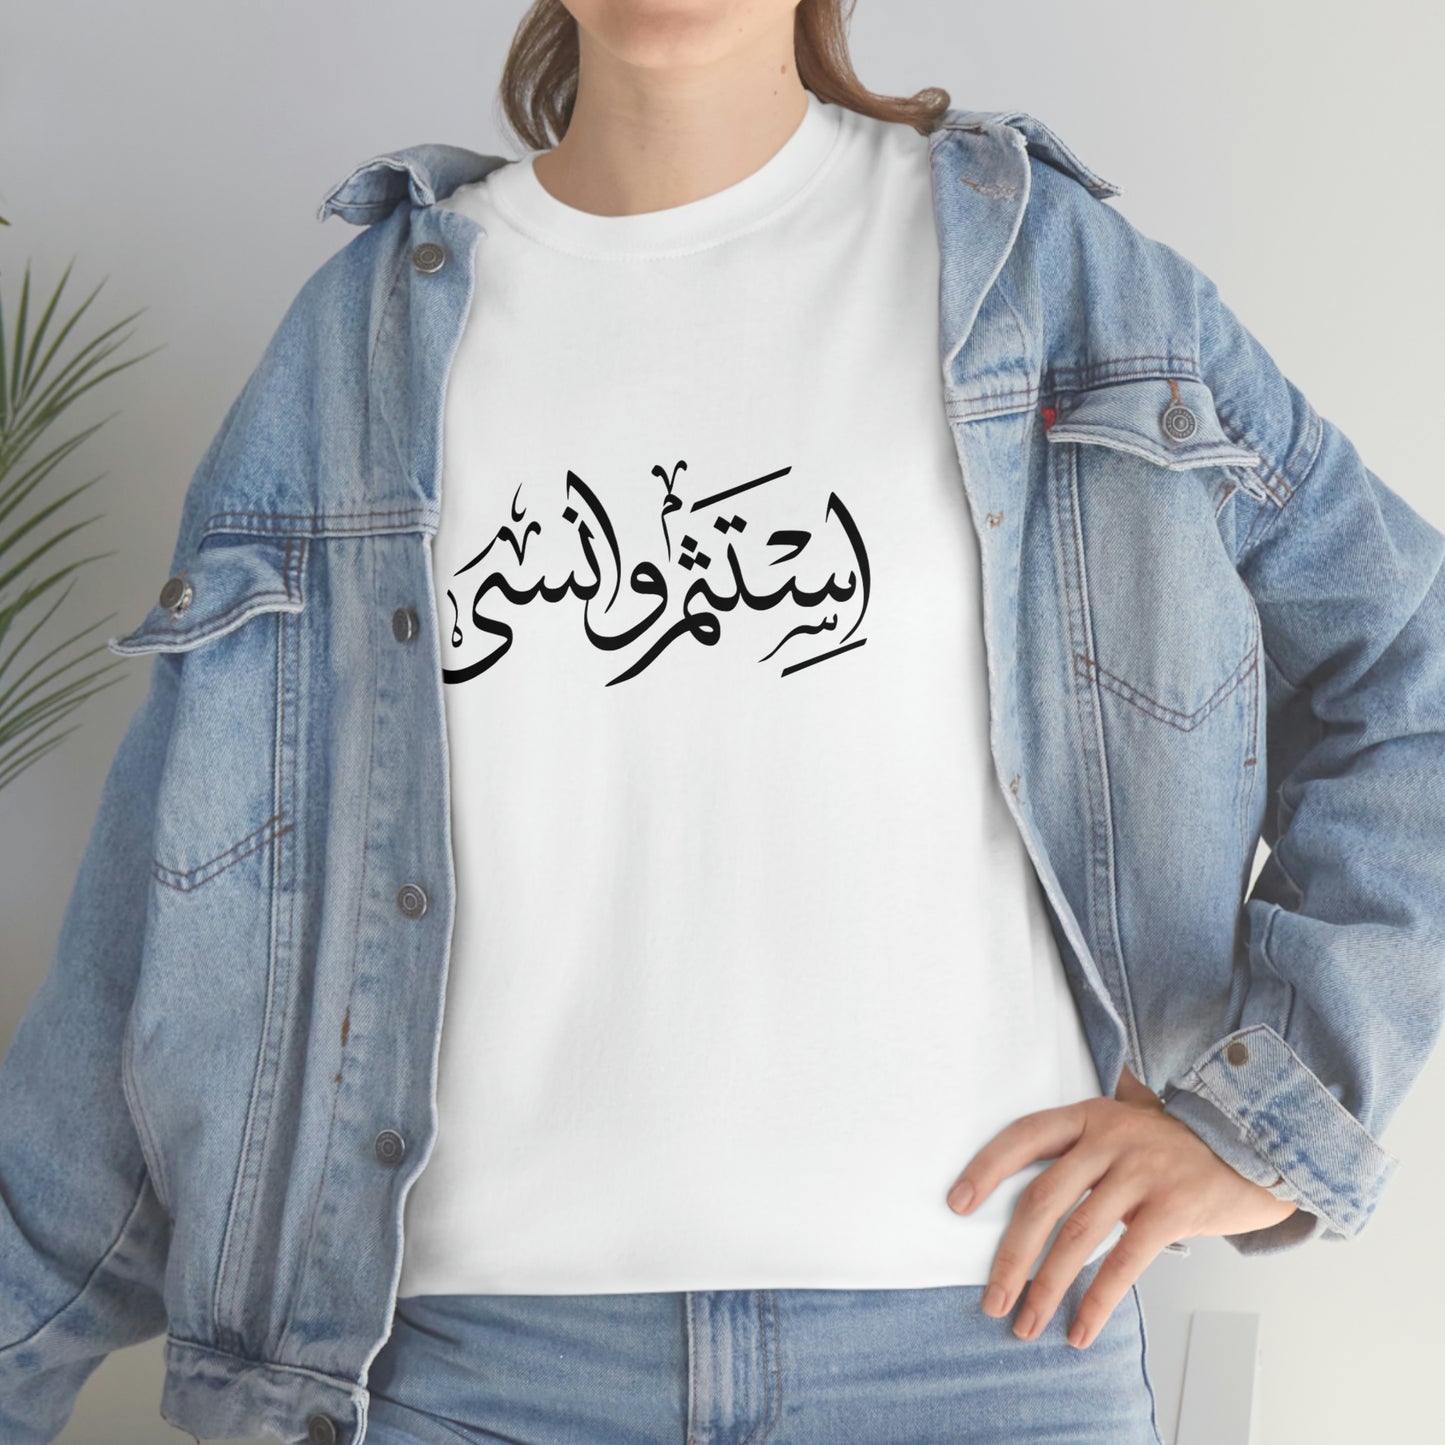 Calligraphie arabe "Investir et oublier"